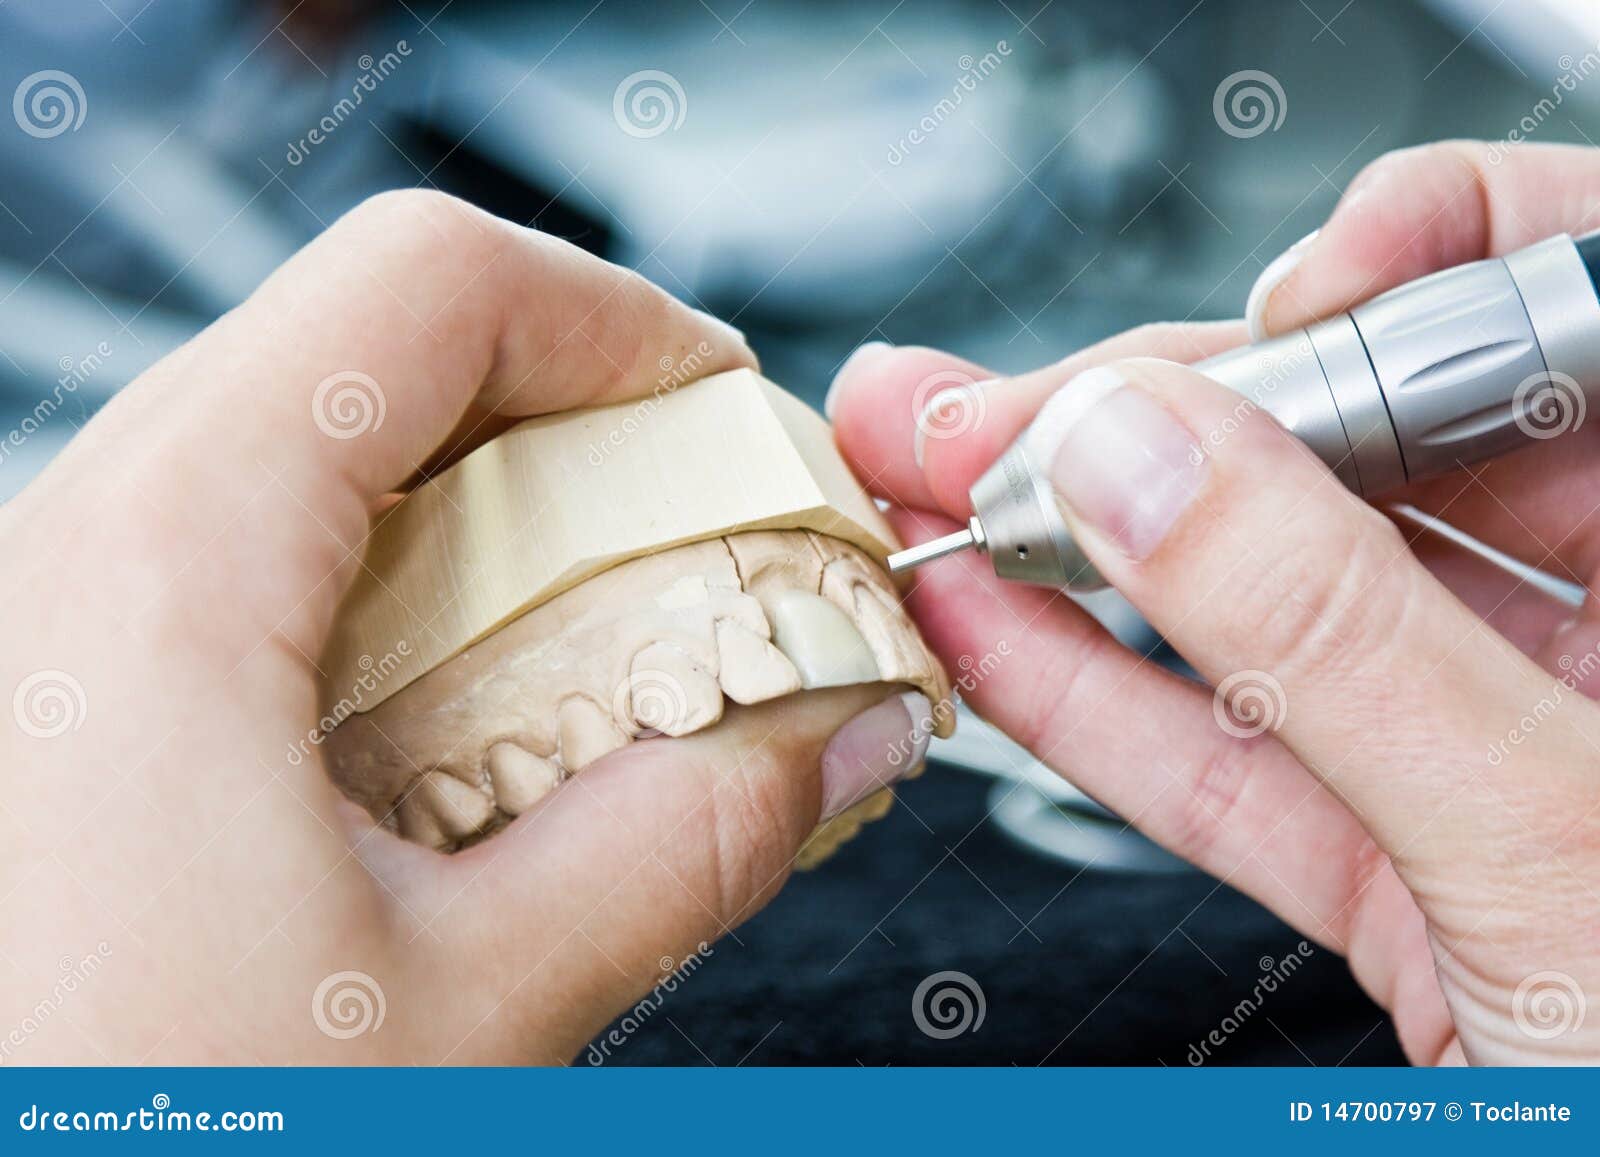 female orthodontist working